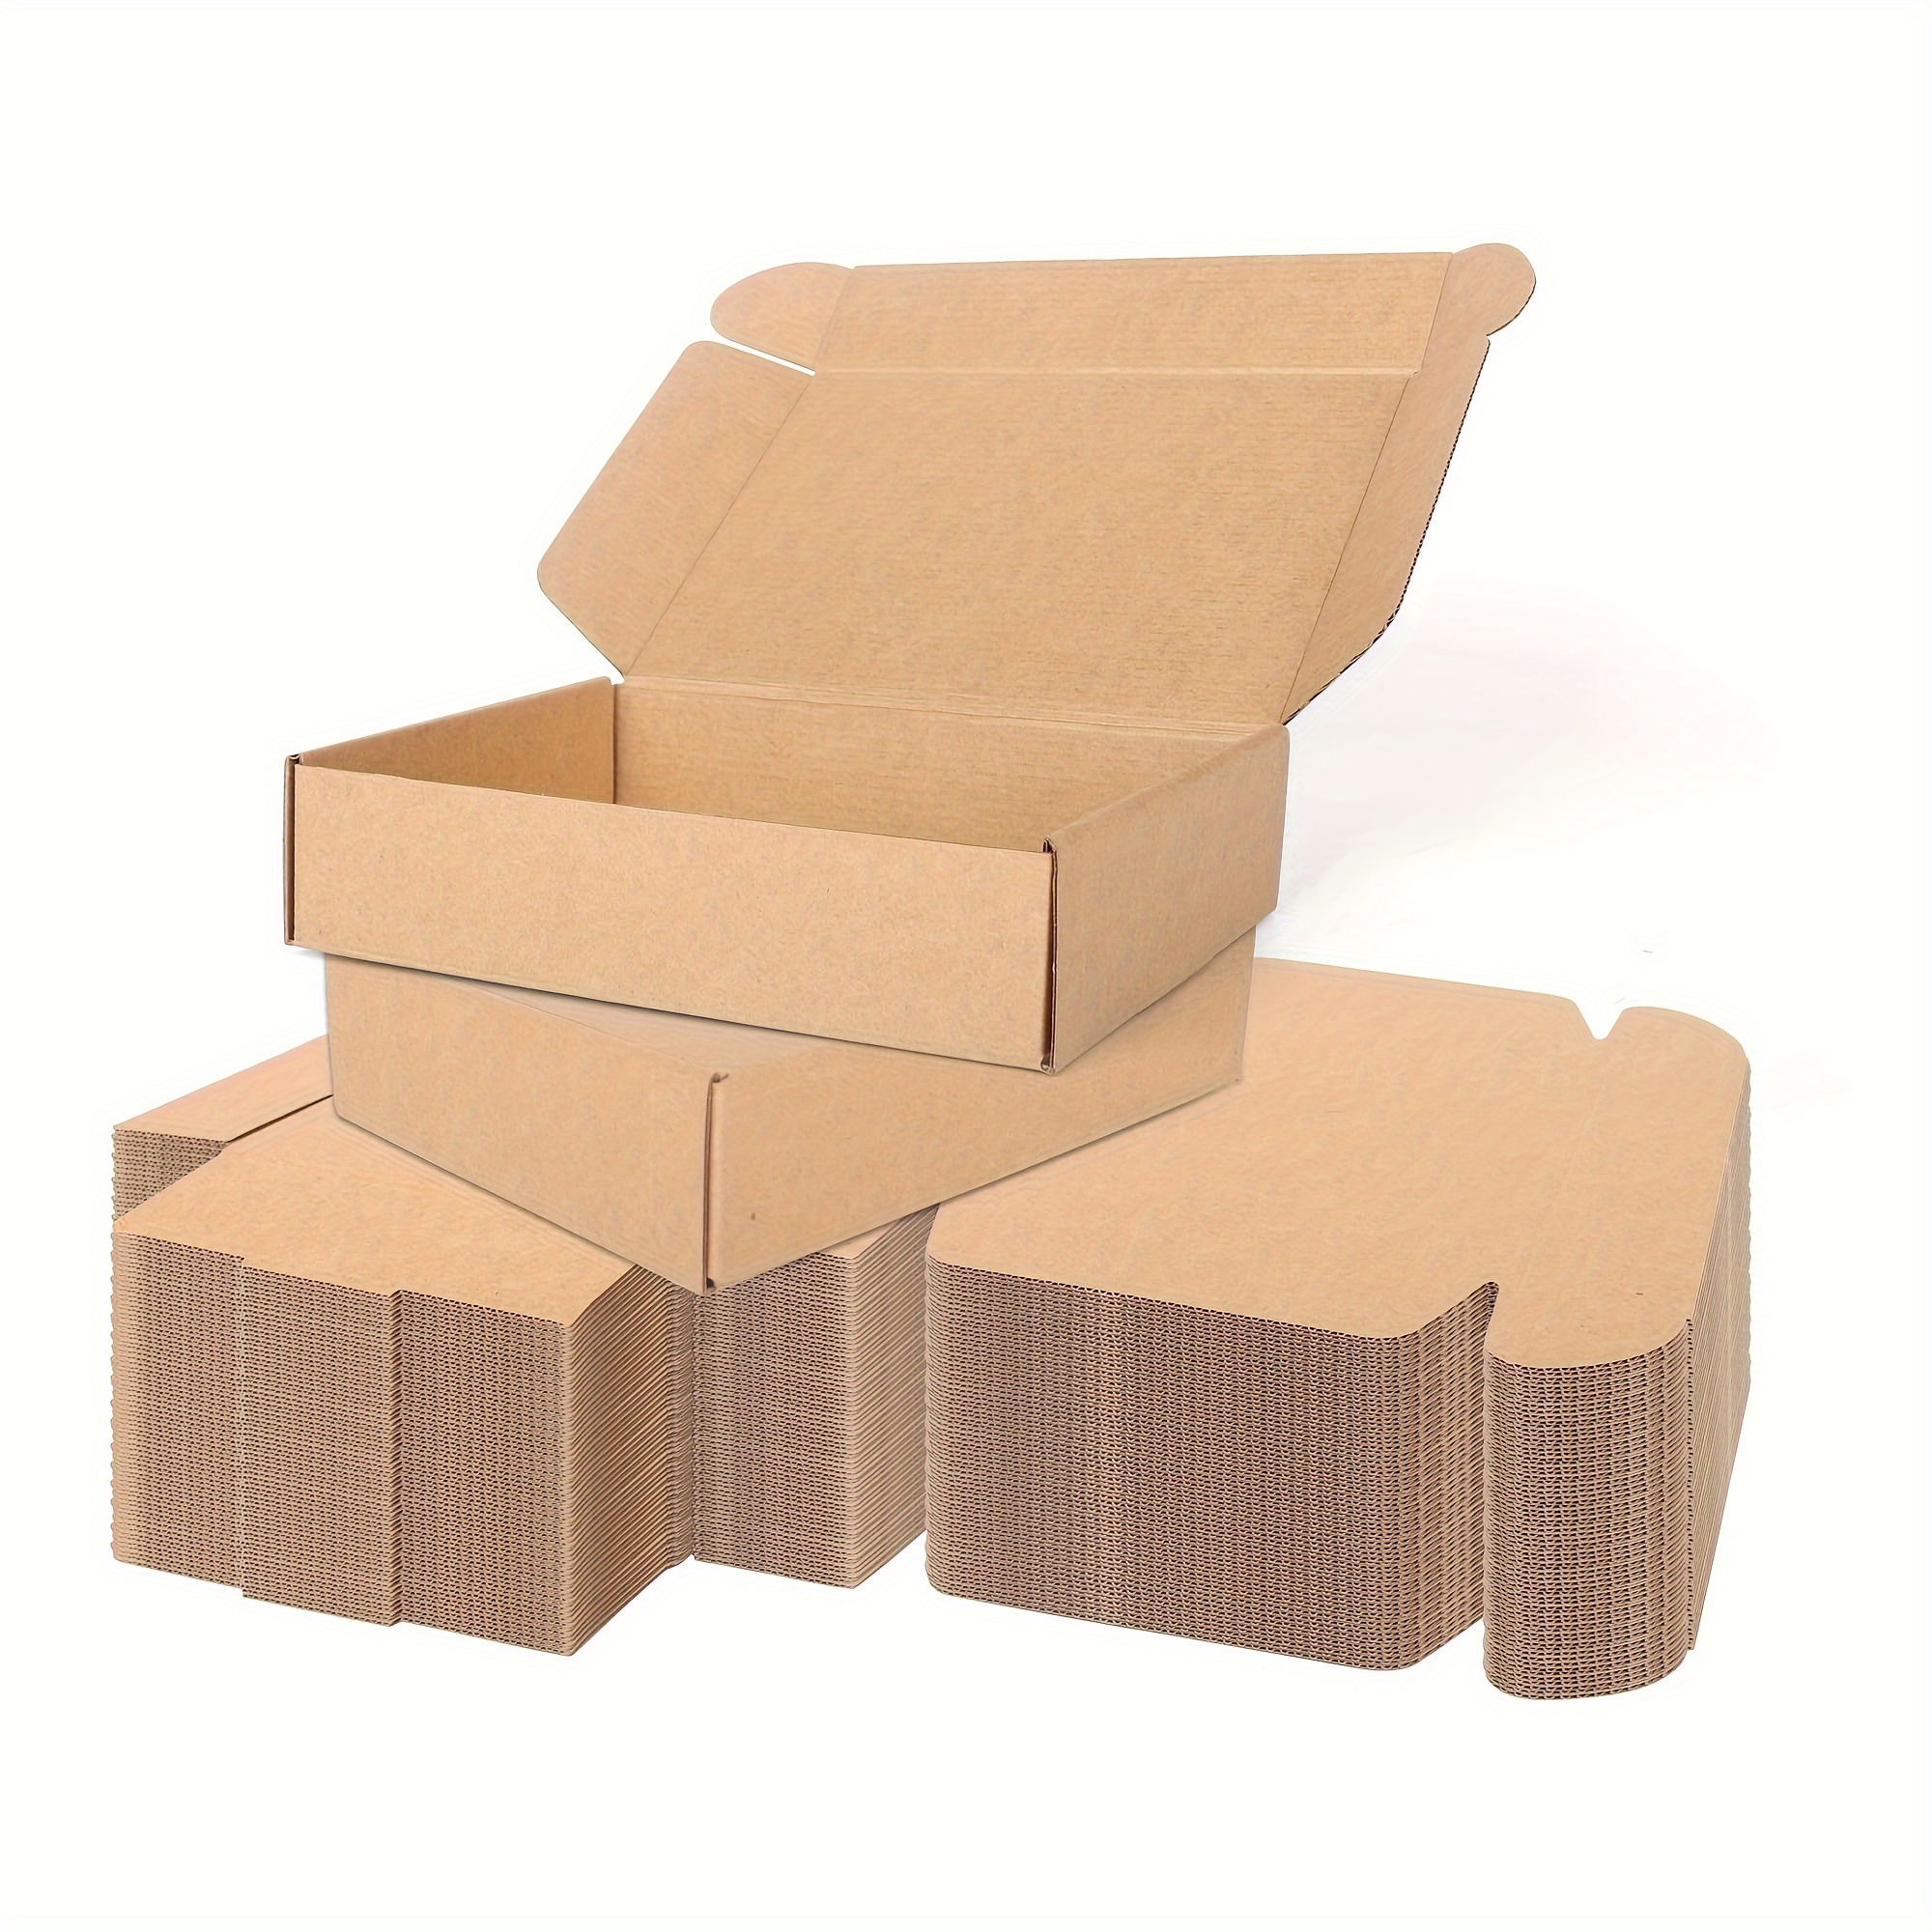 Dicunoy Paquete de 30 cajas de cartón, cajas de envío pequeñas de 9 x 6 x 3  pulgadas, caja de cartón corrugado negro para enviar por correo, cajas de